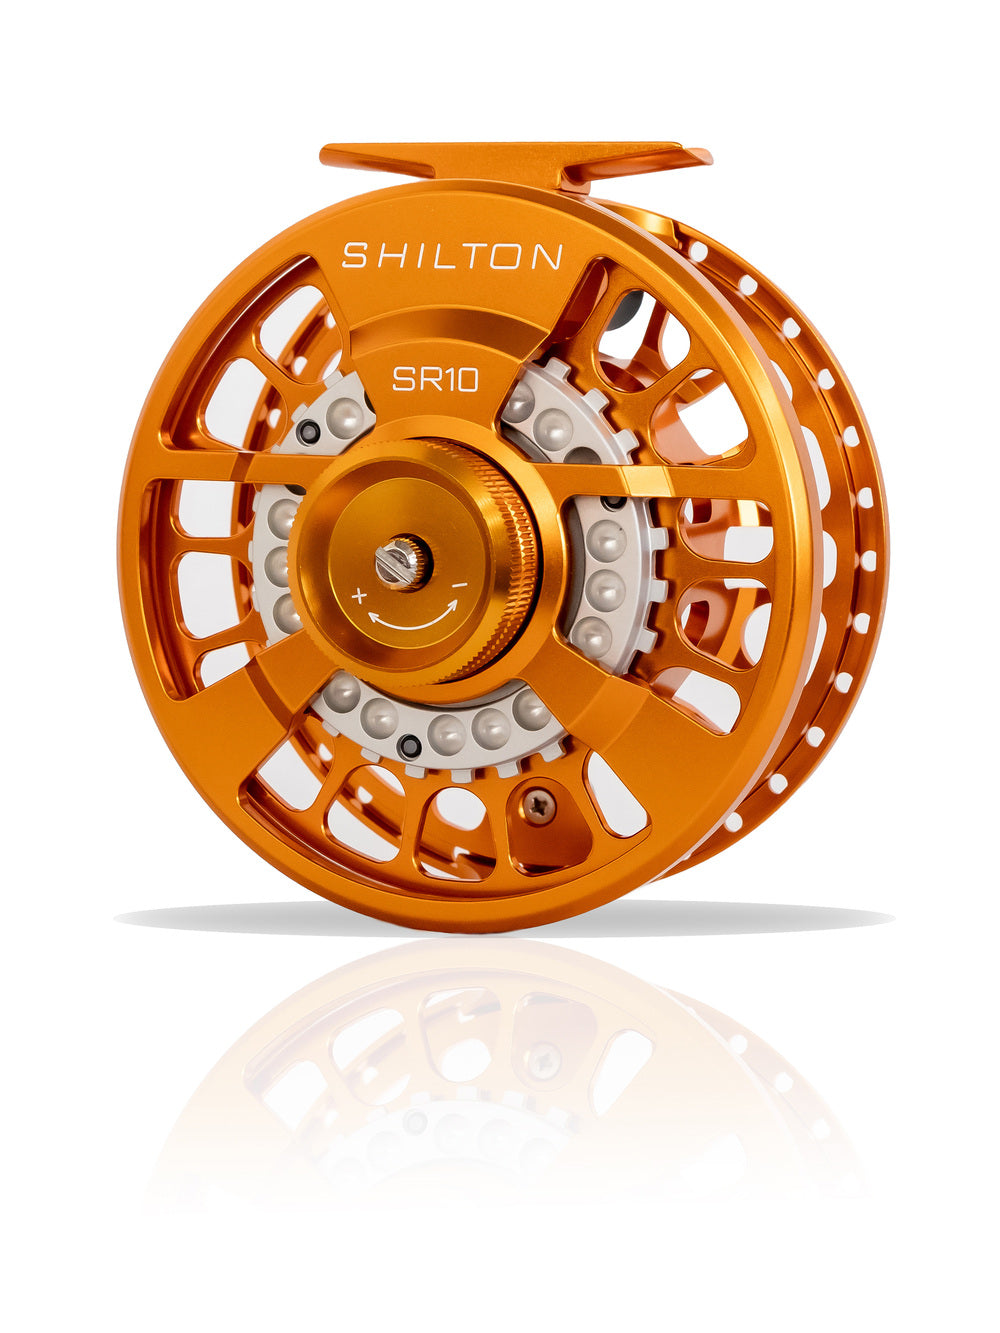 Shilton SR10 Reels (10-11wt) in Golden Orange